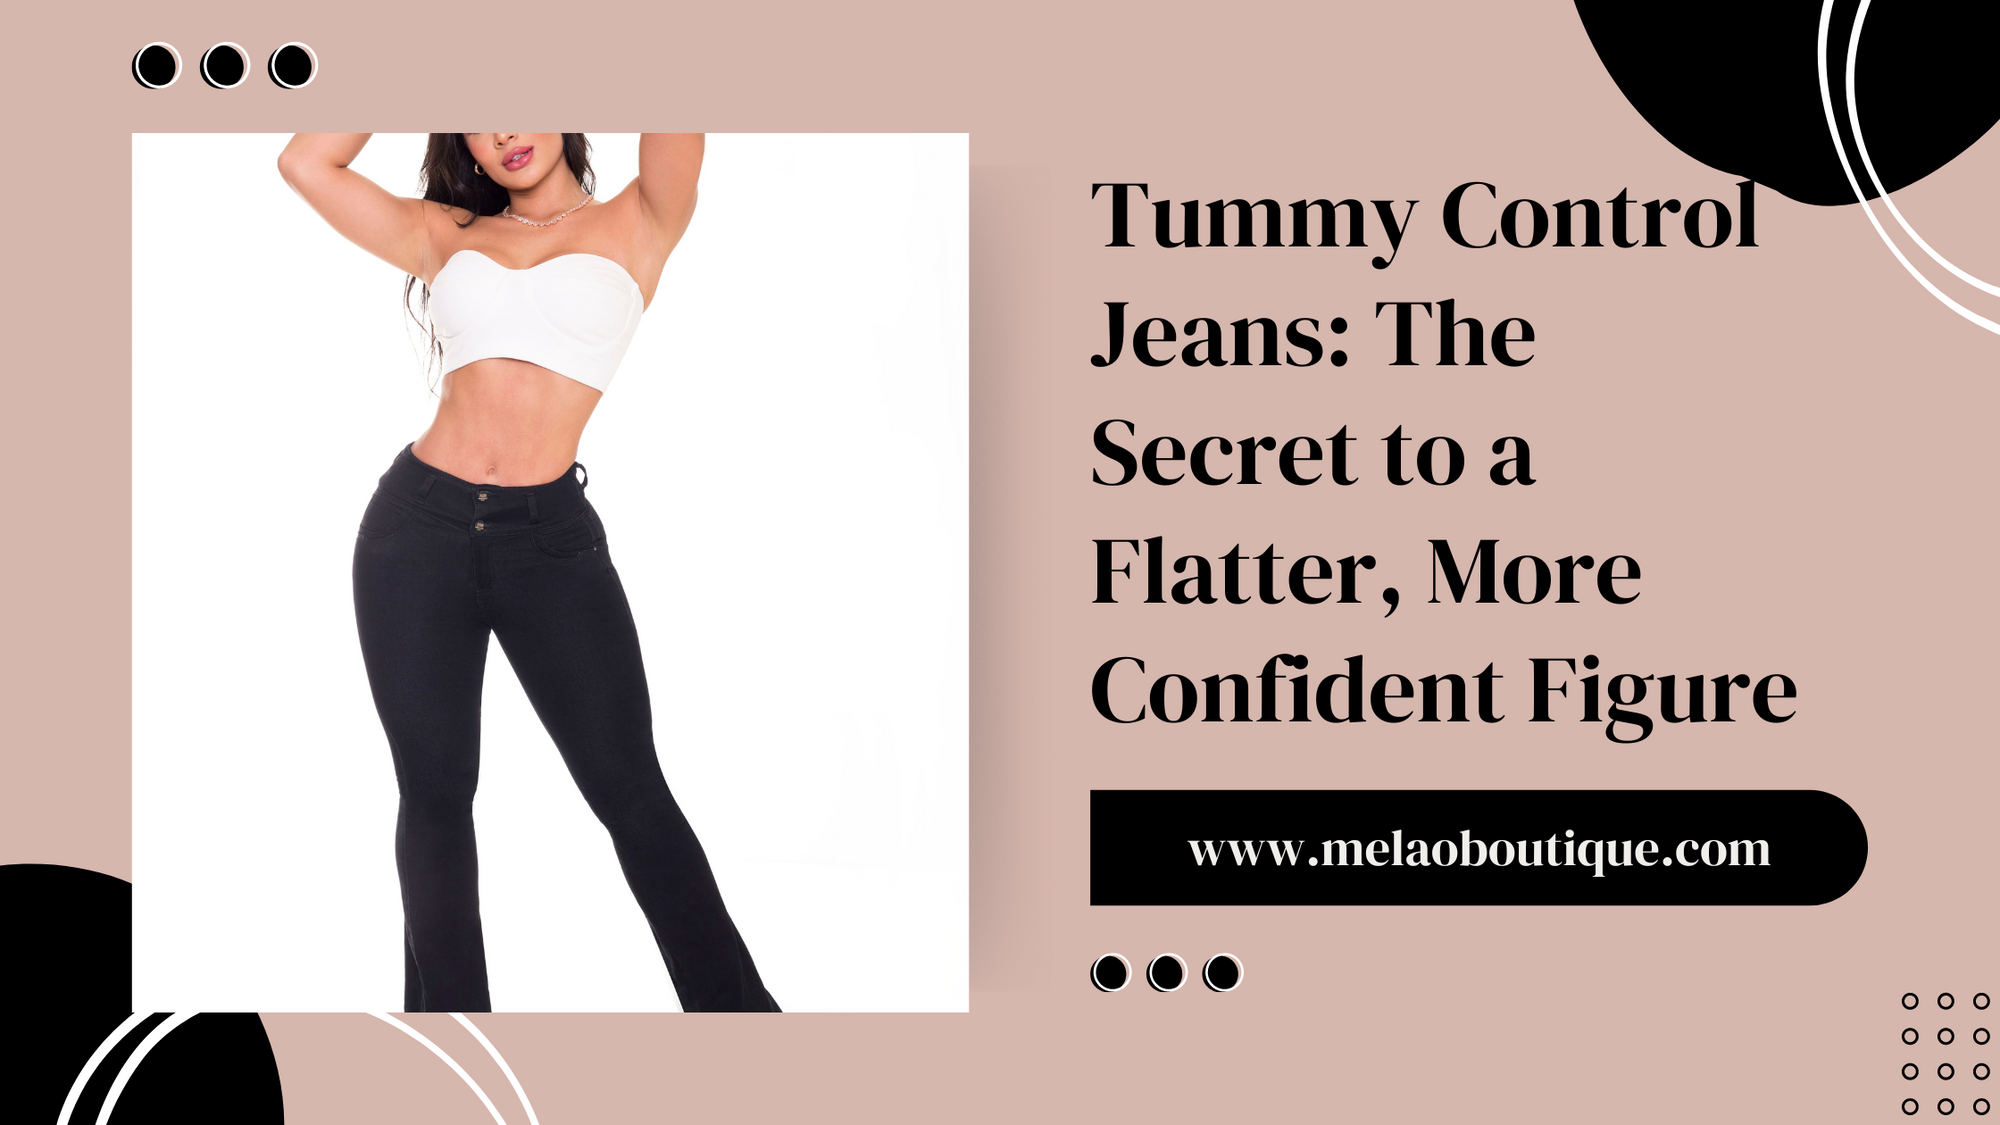 Tummy Control Jeans The Secret to a Flatter, More Confident Figure